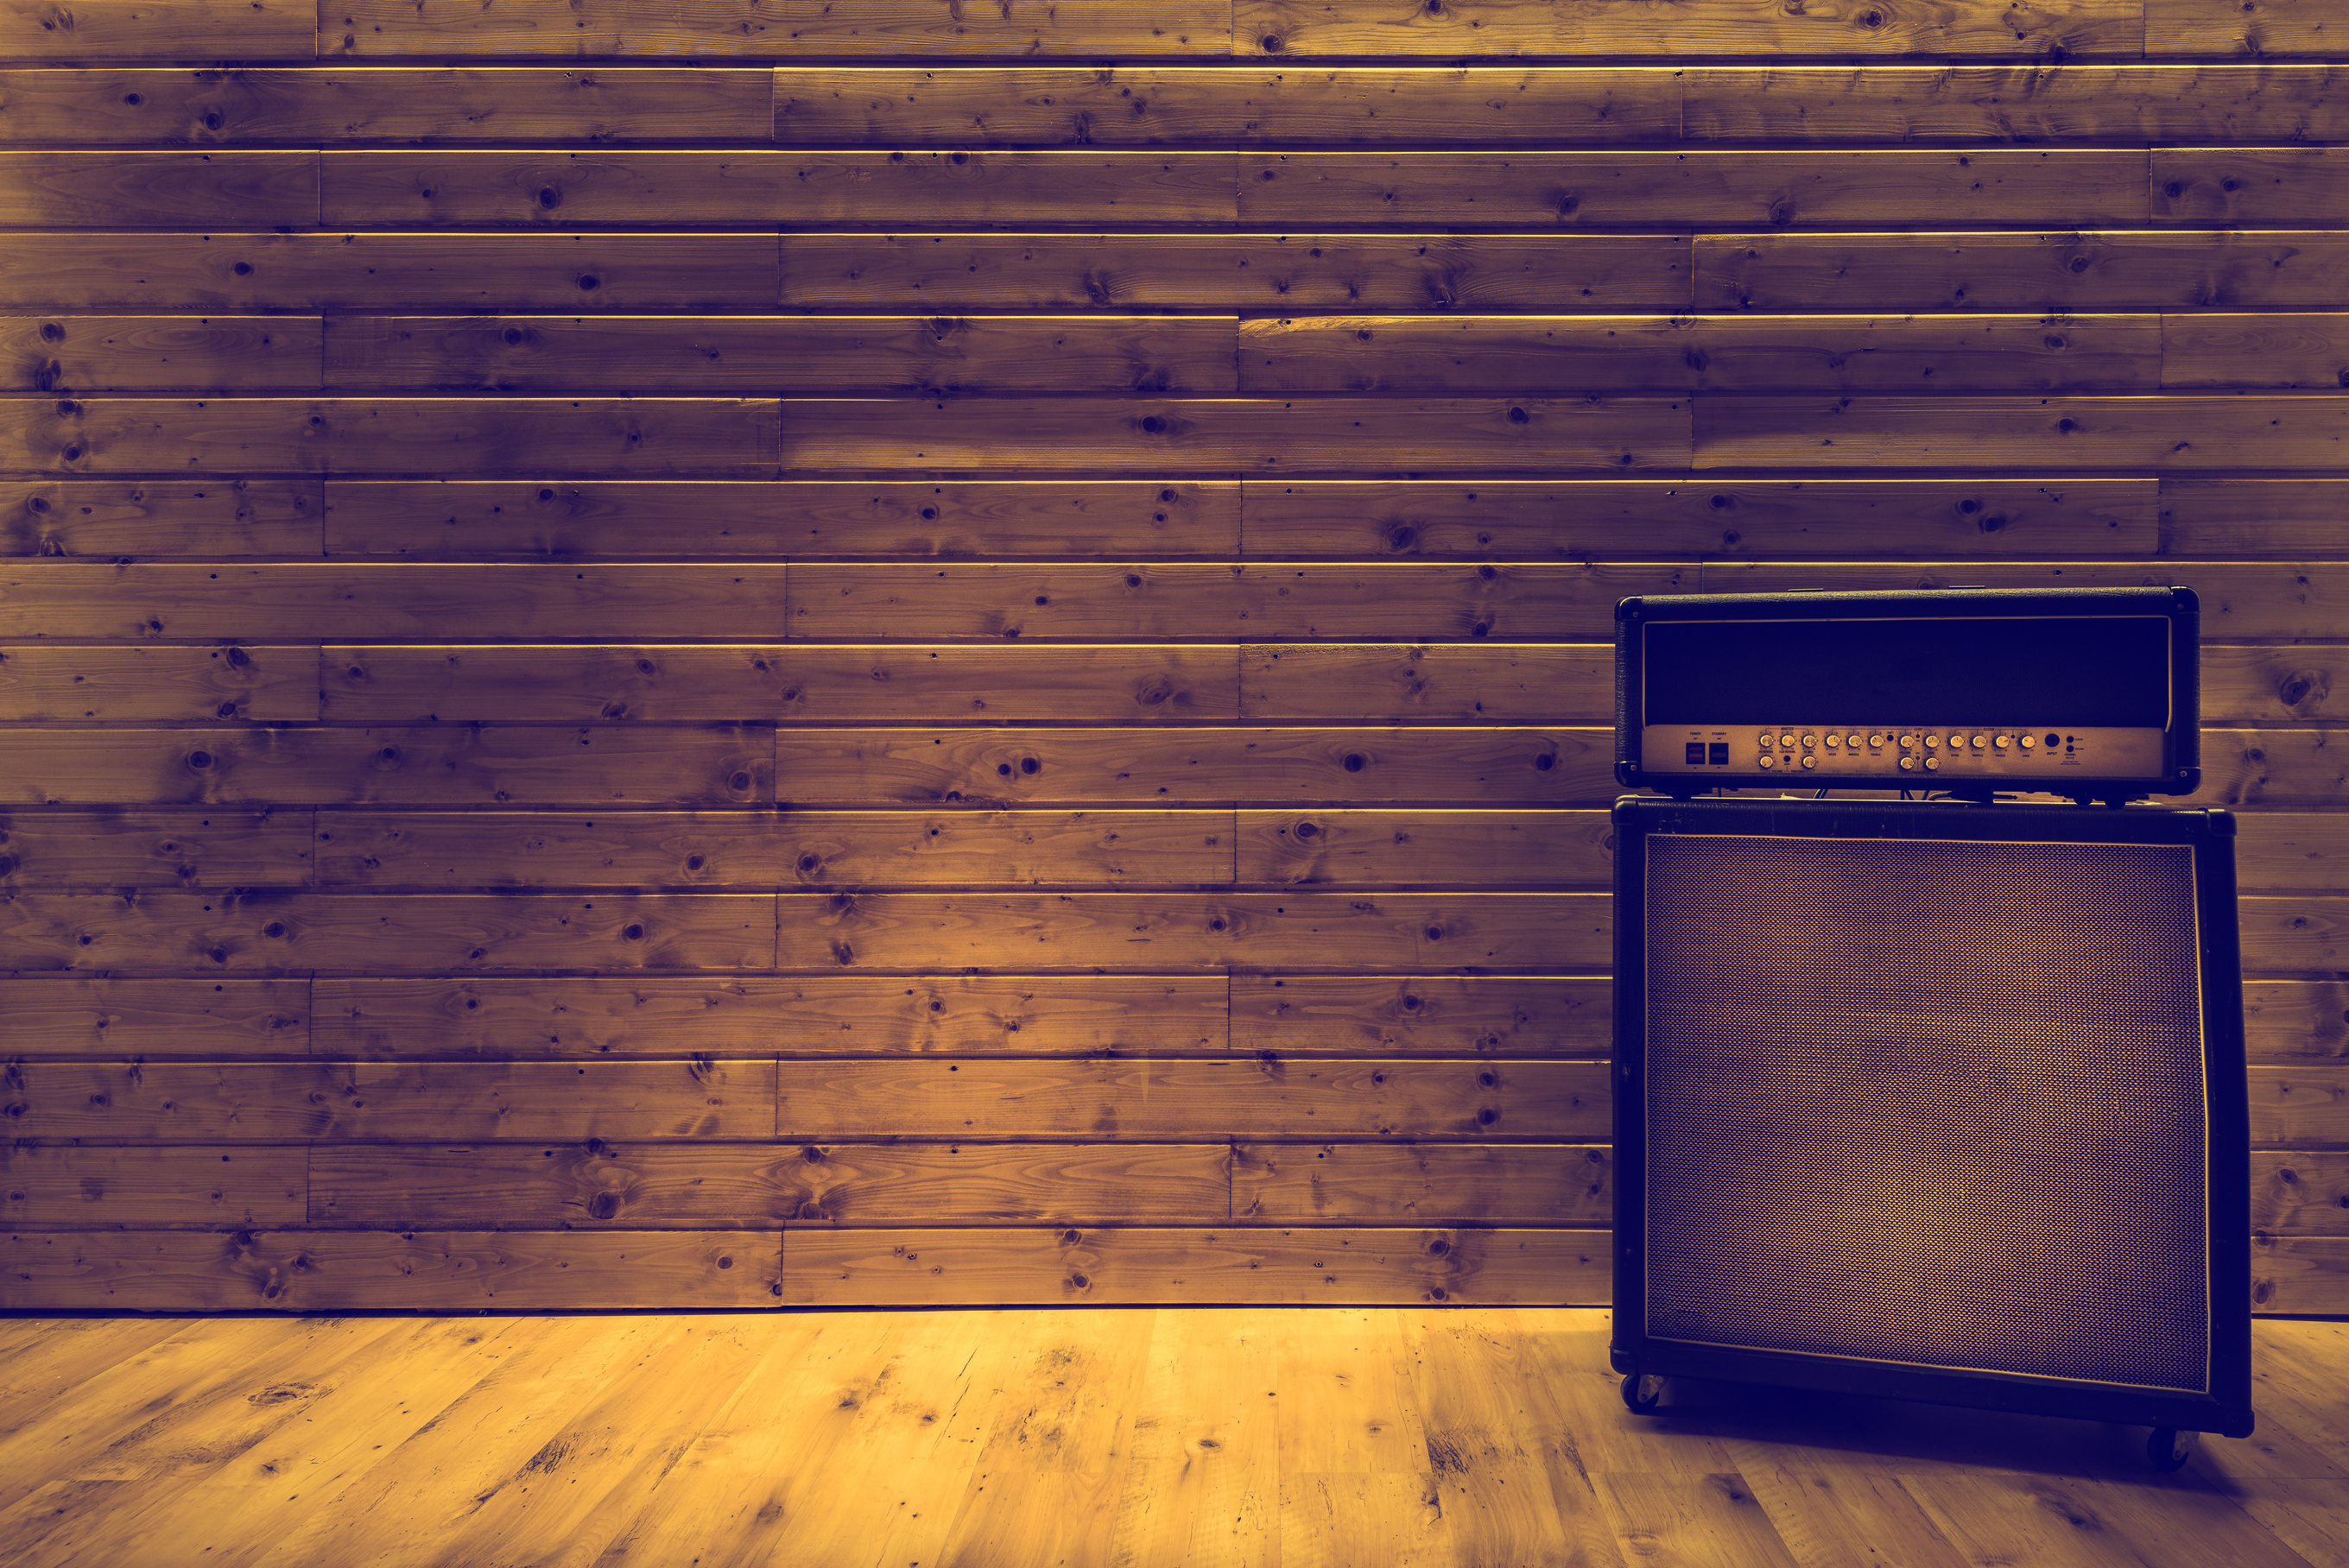 Guitar amplifier on wooden wall and floor, music studio